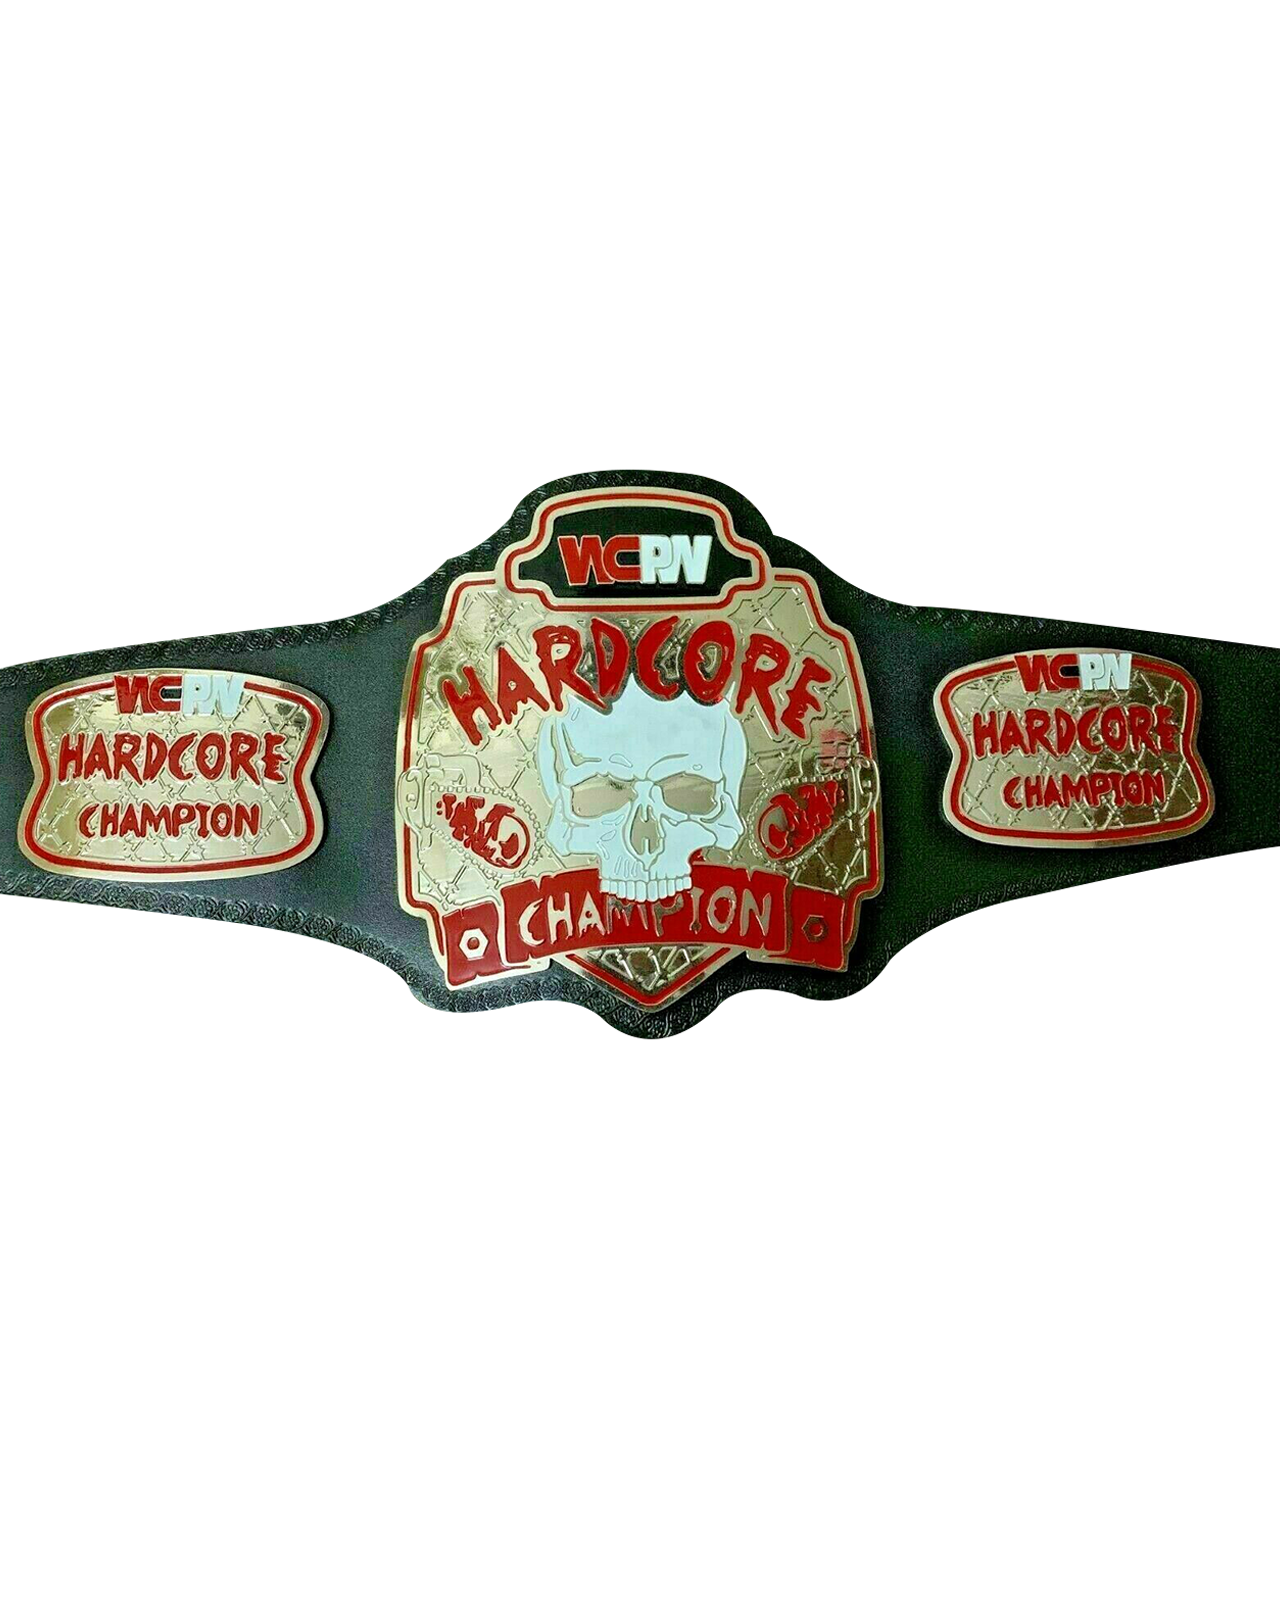 WCPW HARDCORE Wrestling Championship Belt - Aspire Leather